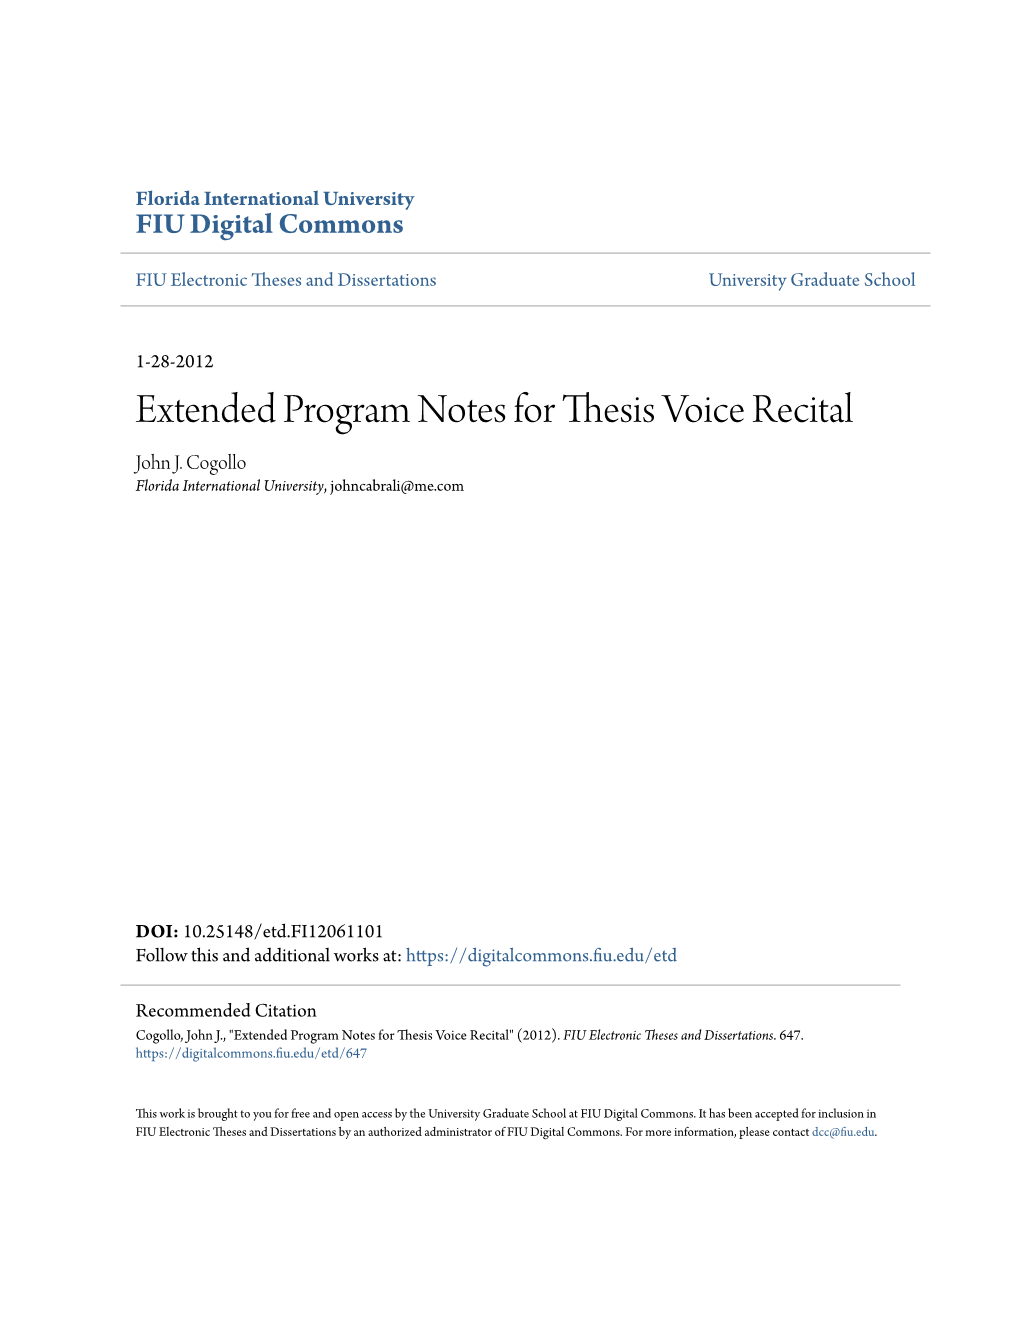 Extended Program Notes for Thesis Voice Recital John J